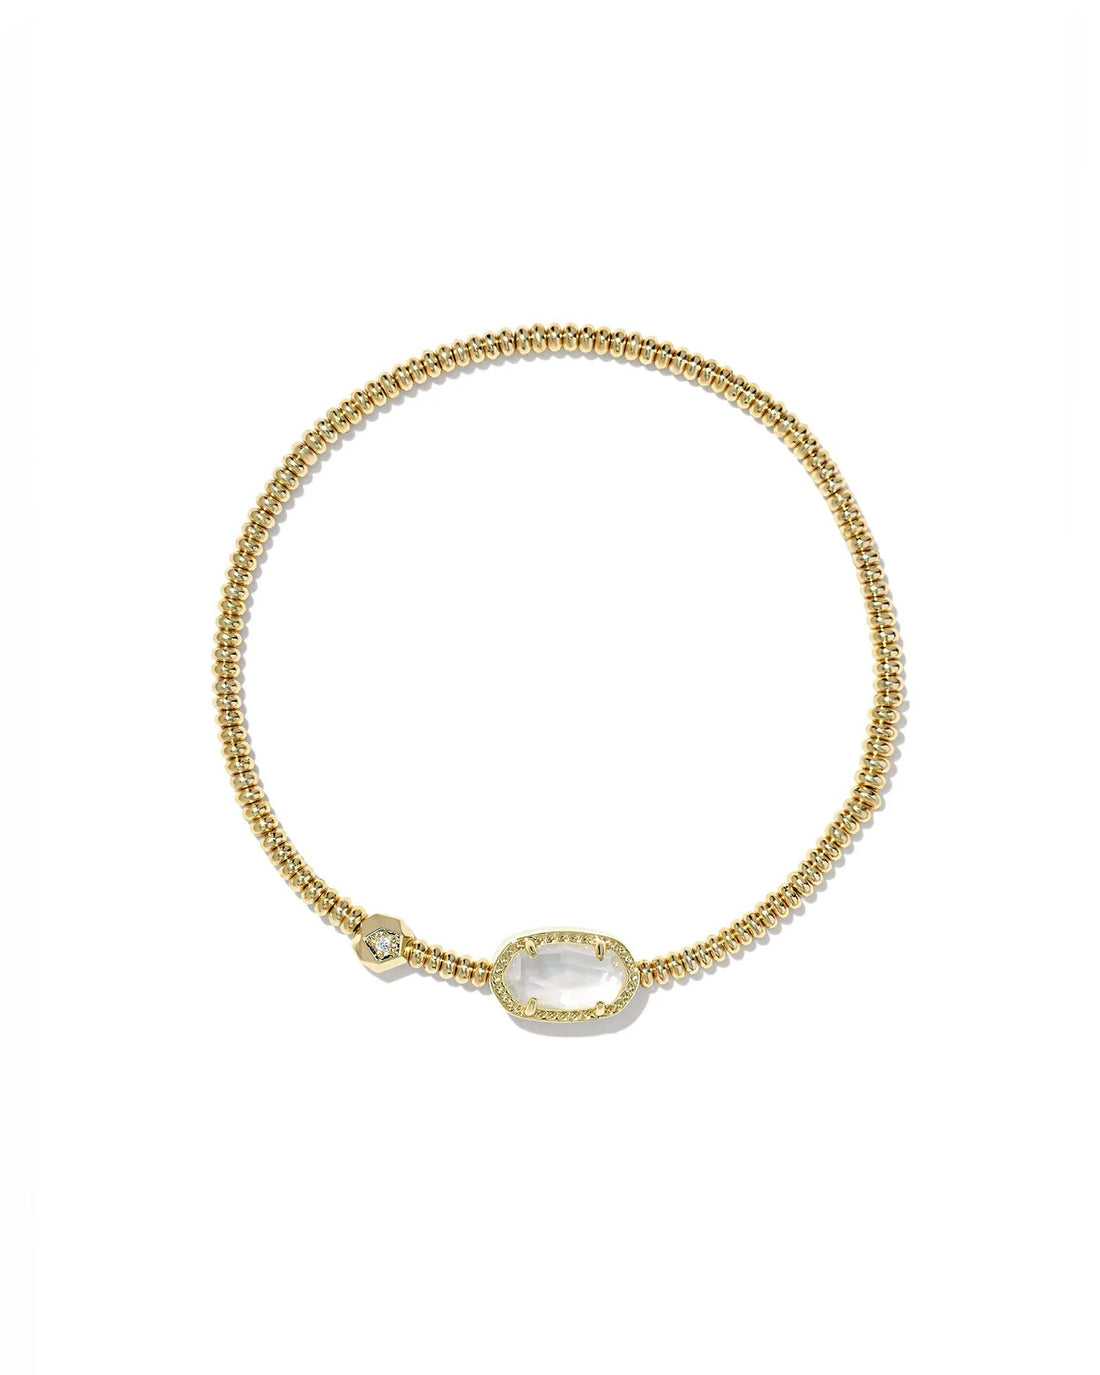 Grayson Stretch Bracelet - Gold Ivory Mother of Pearl